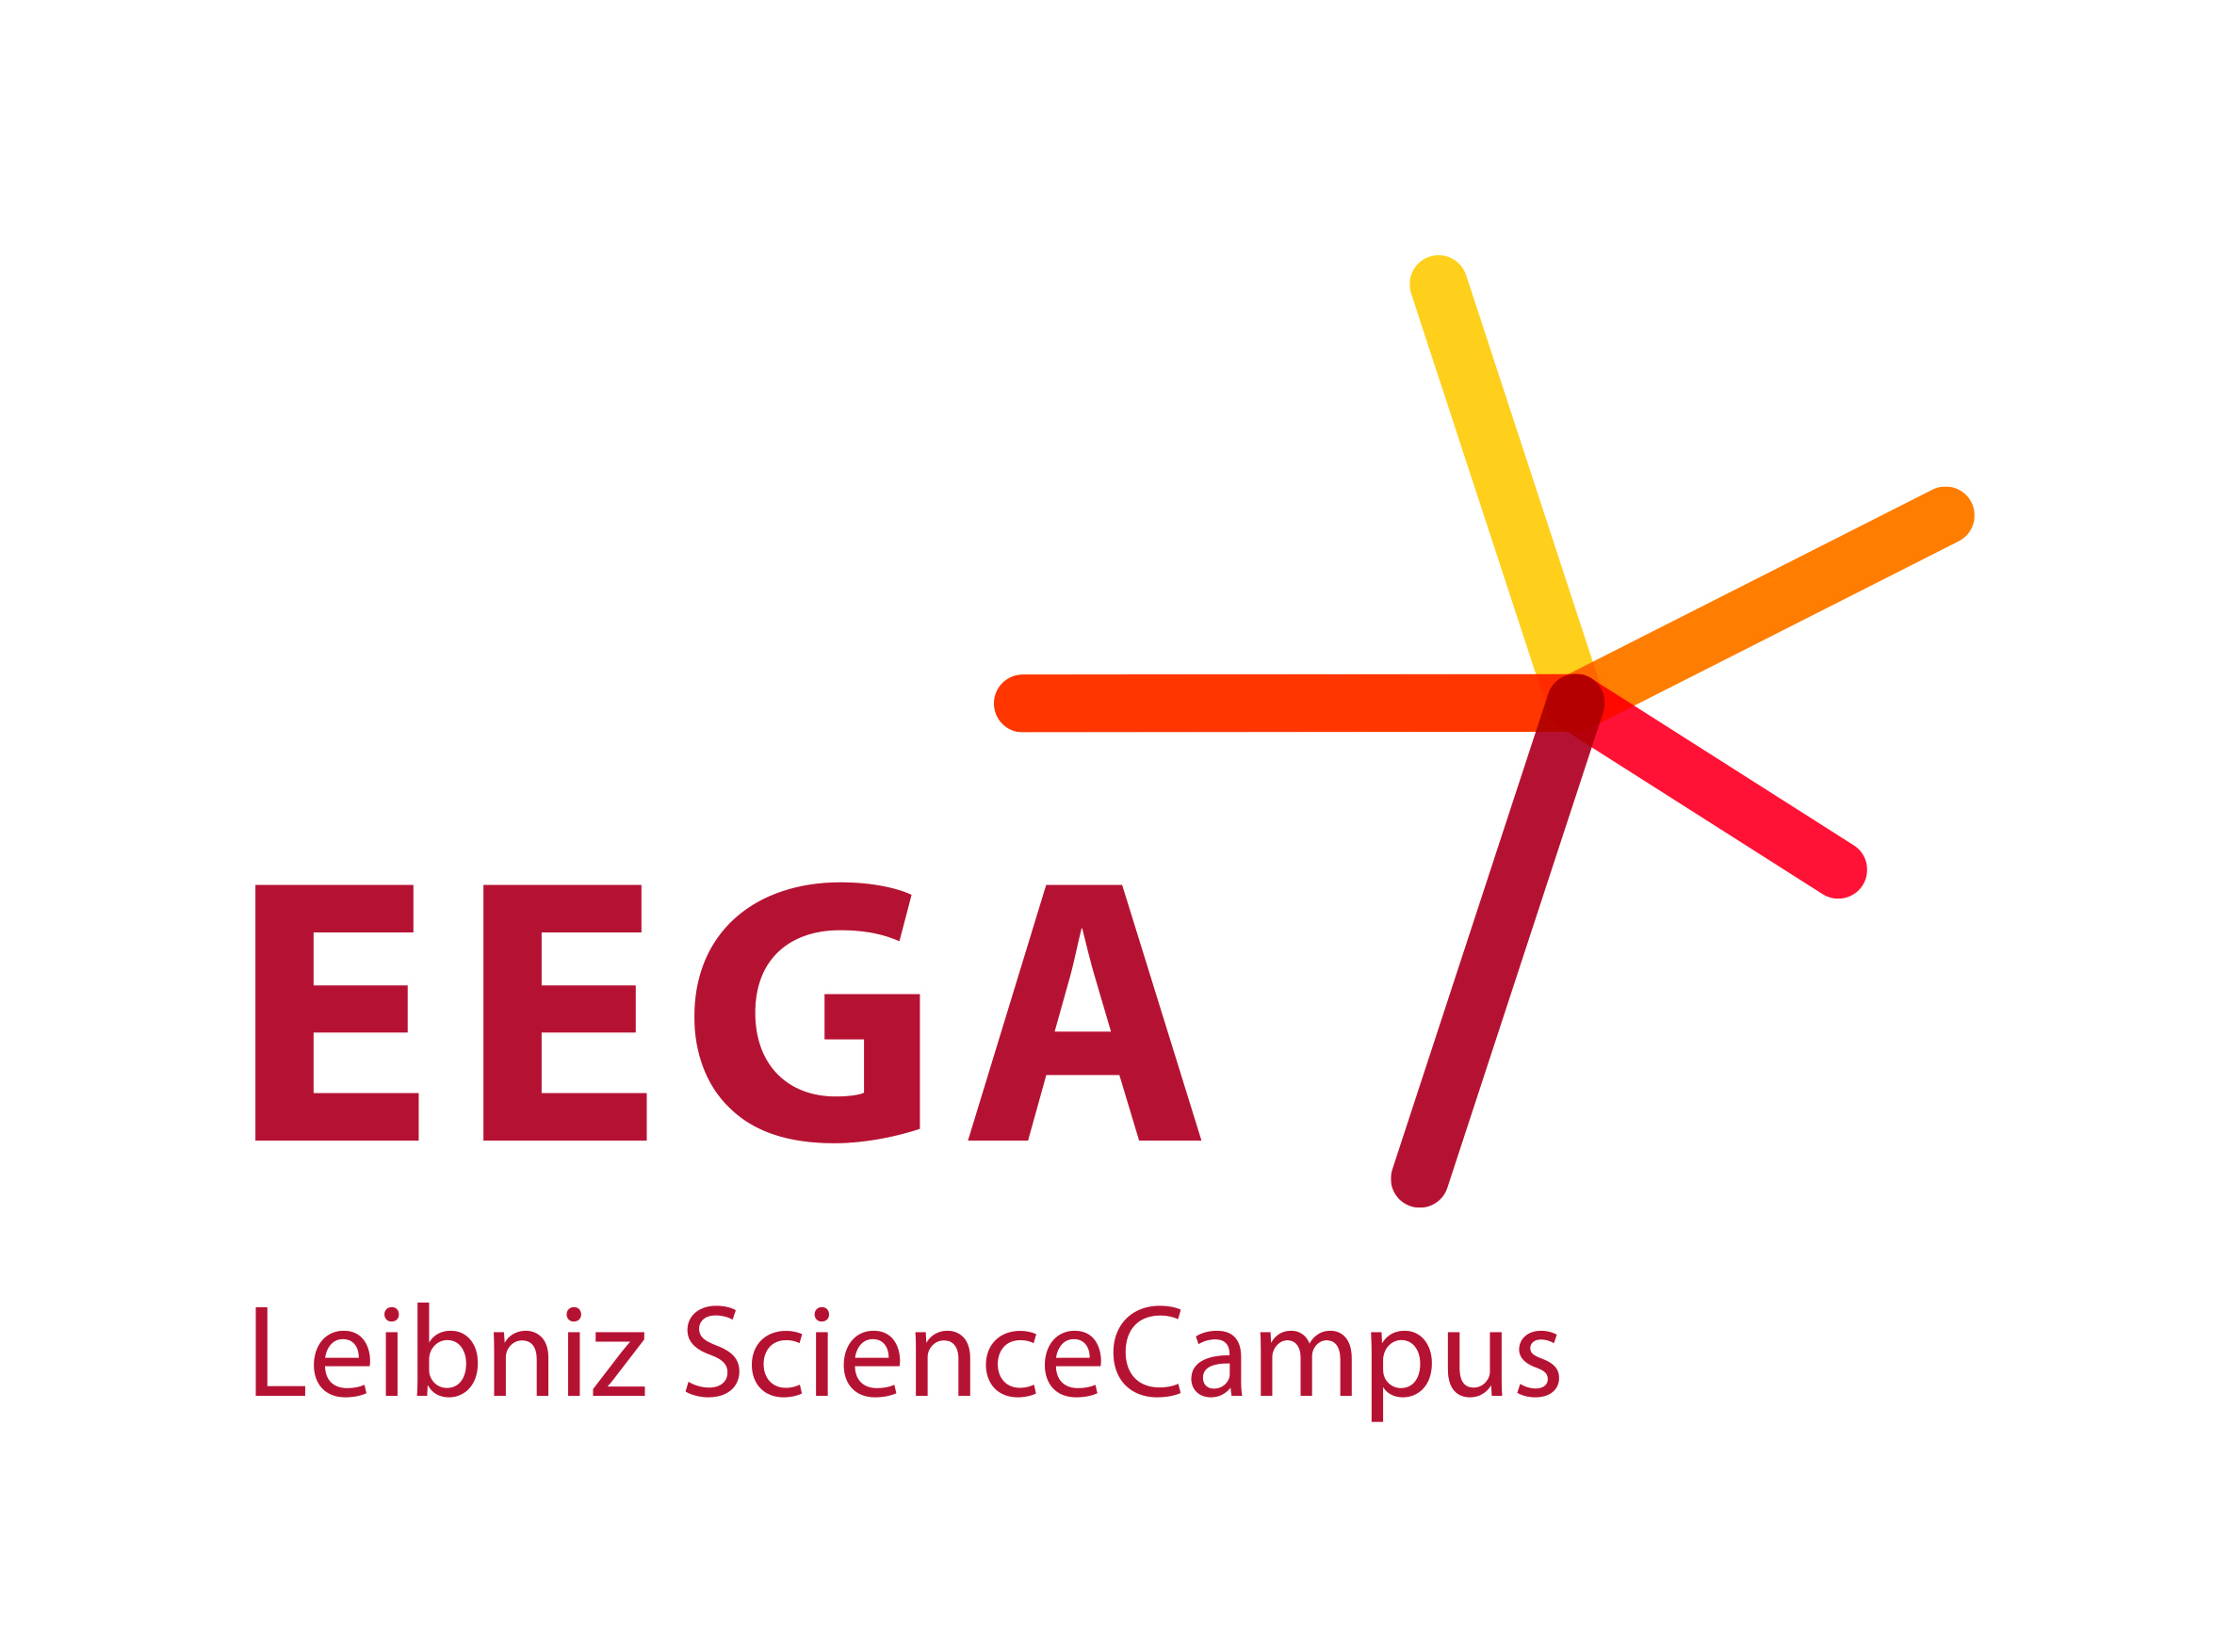 EEGA-Logo Wort-Bild-Marke (CMYK_300dpi)